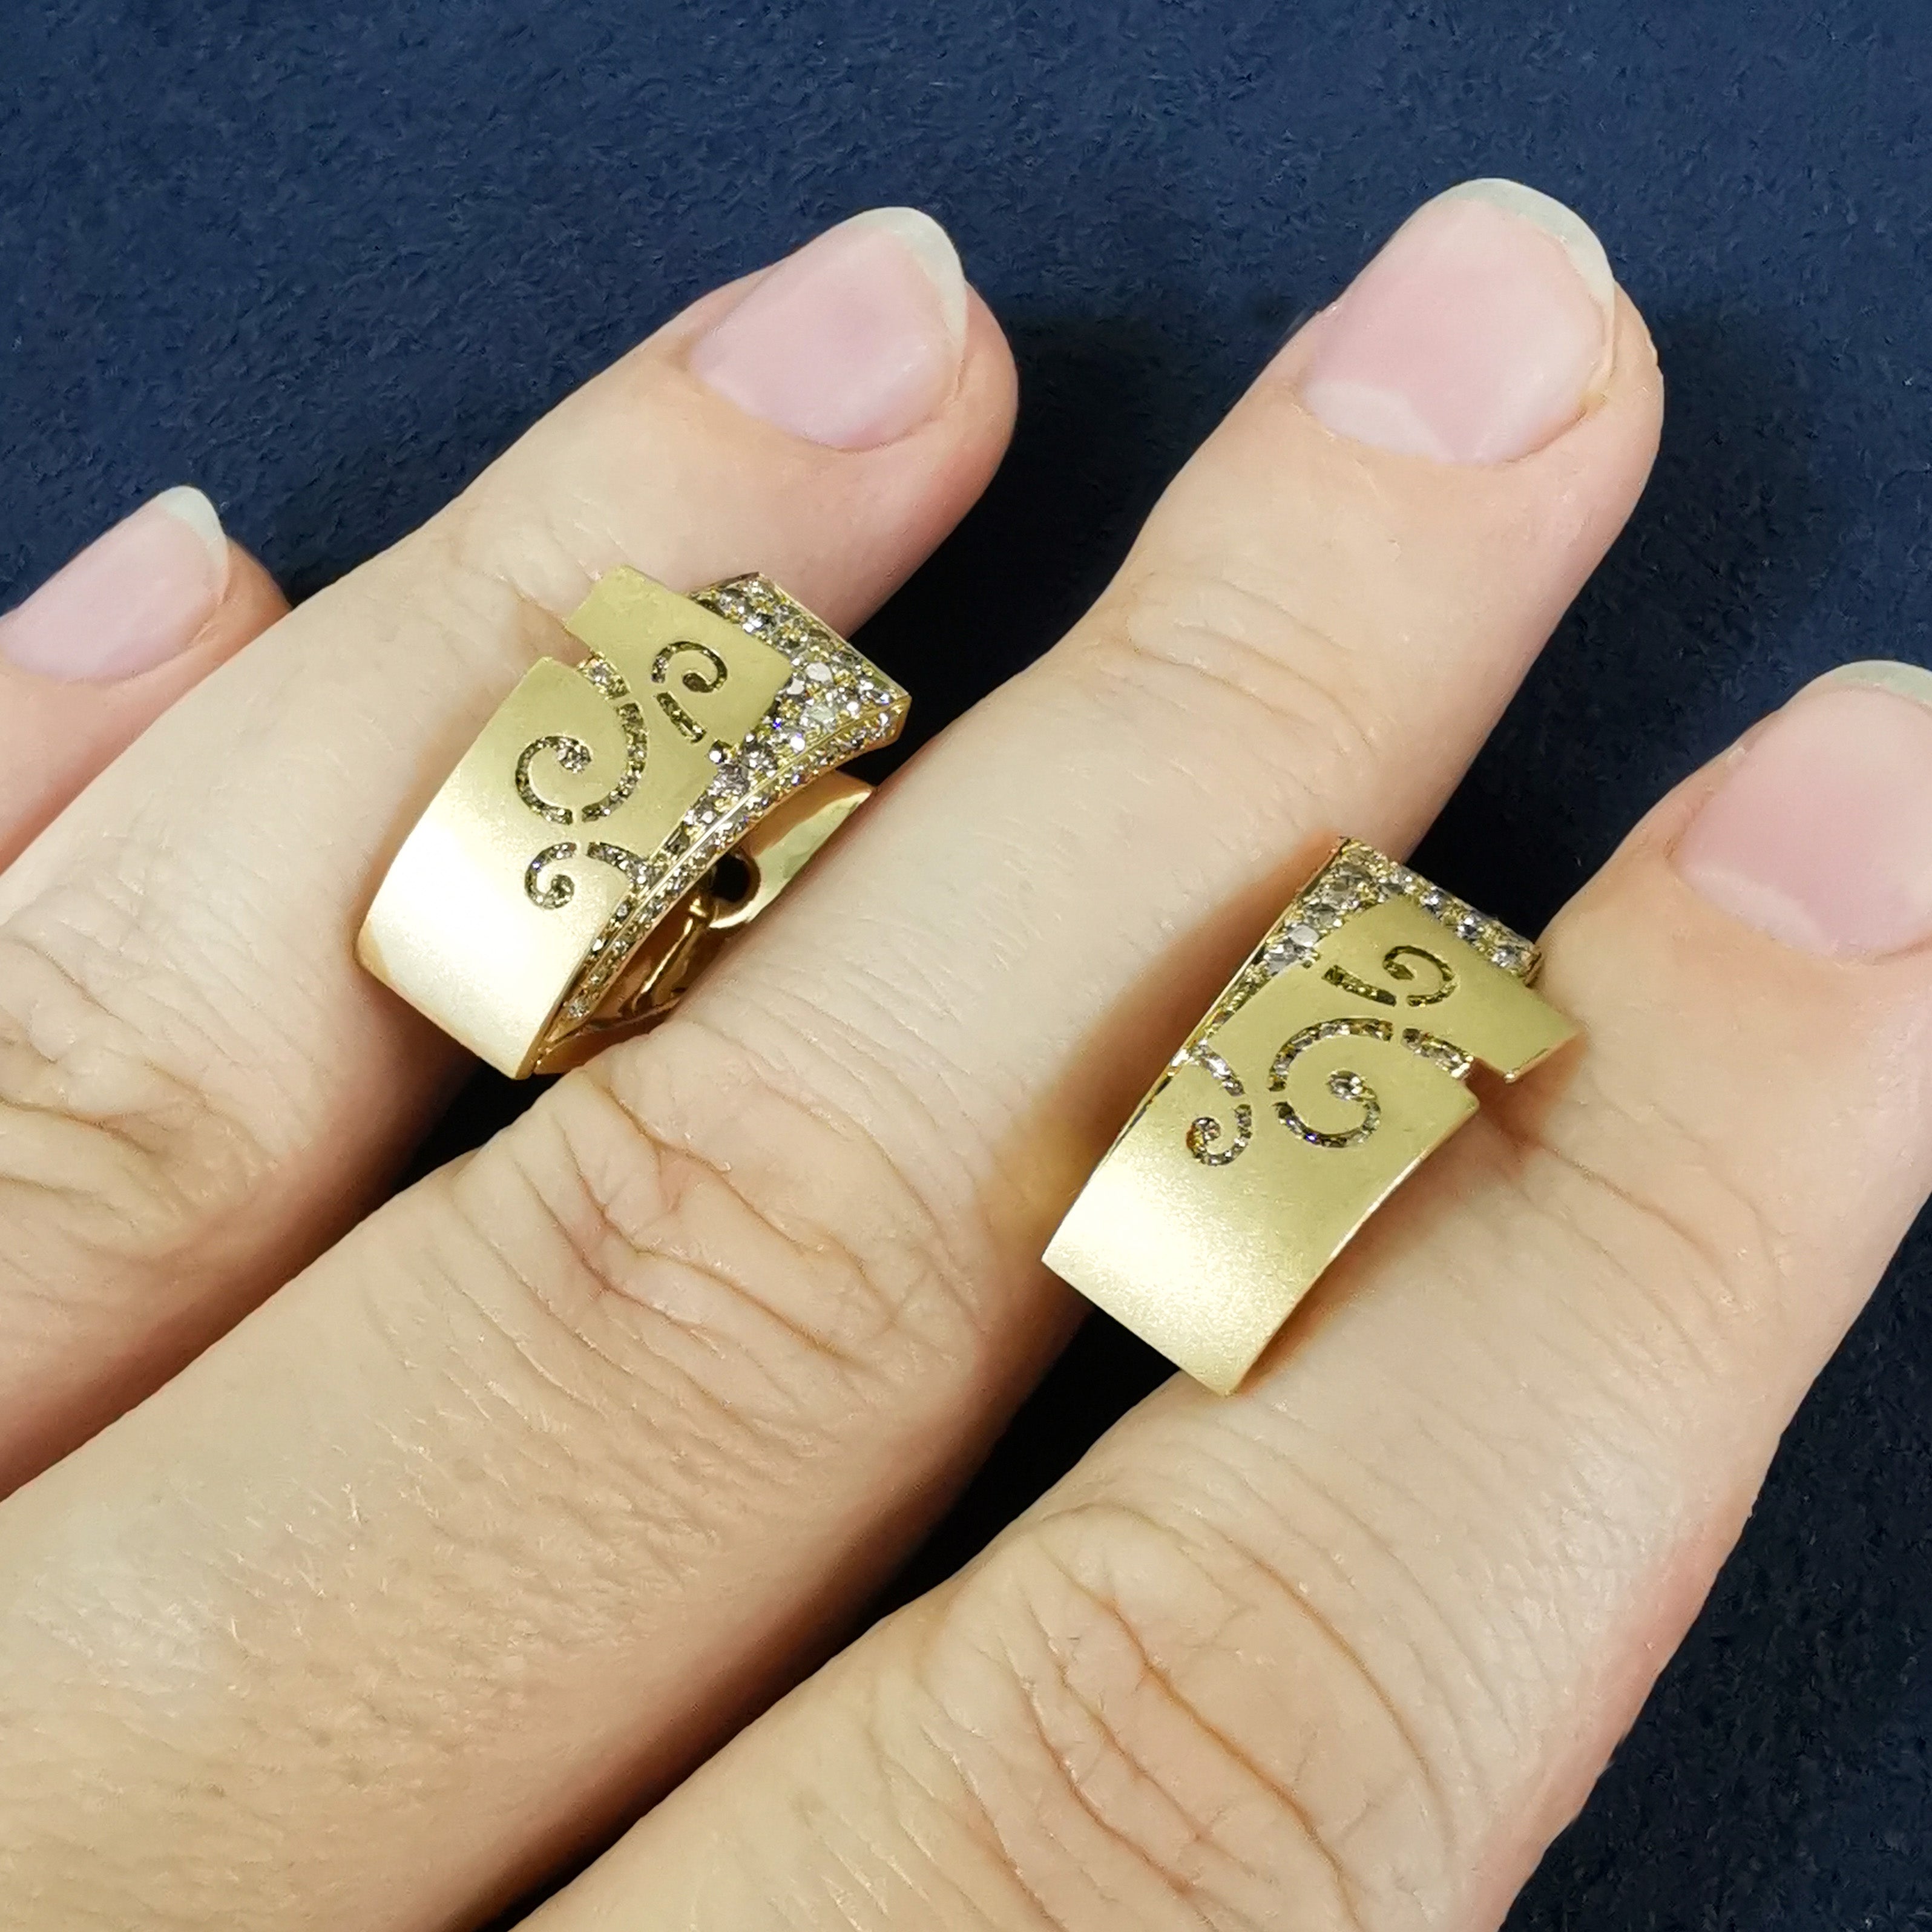 E 0003-3, 18K Yellow Gold, Champagne Diamonds Earrings